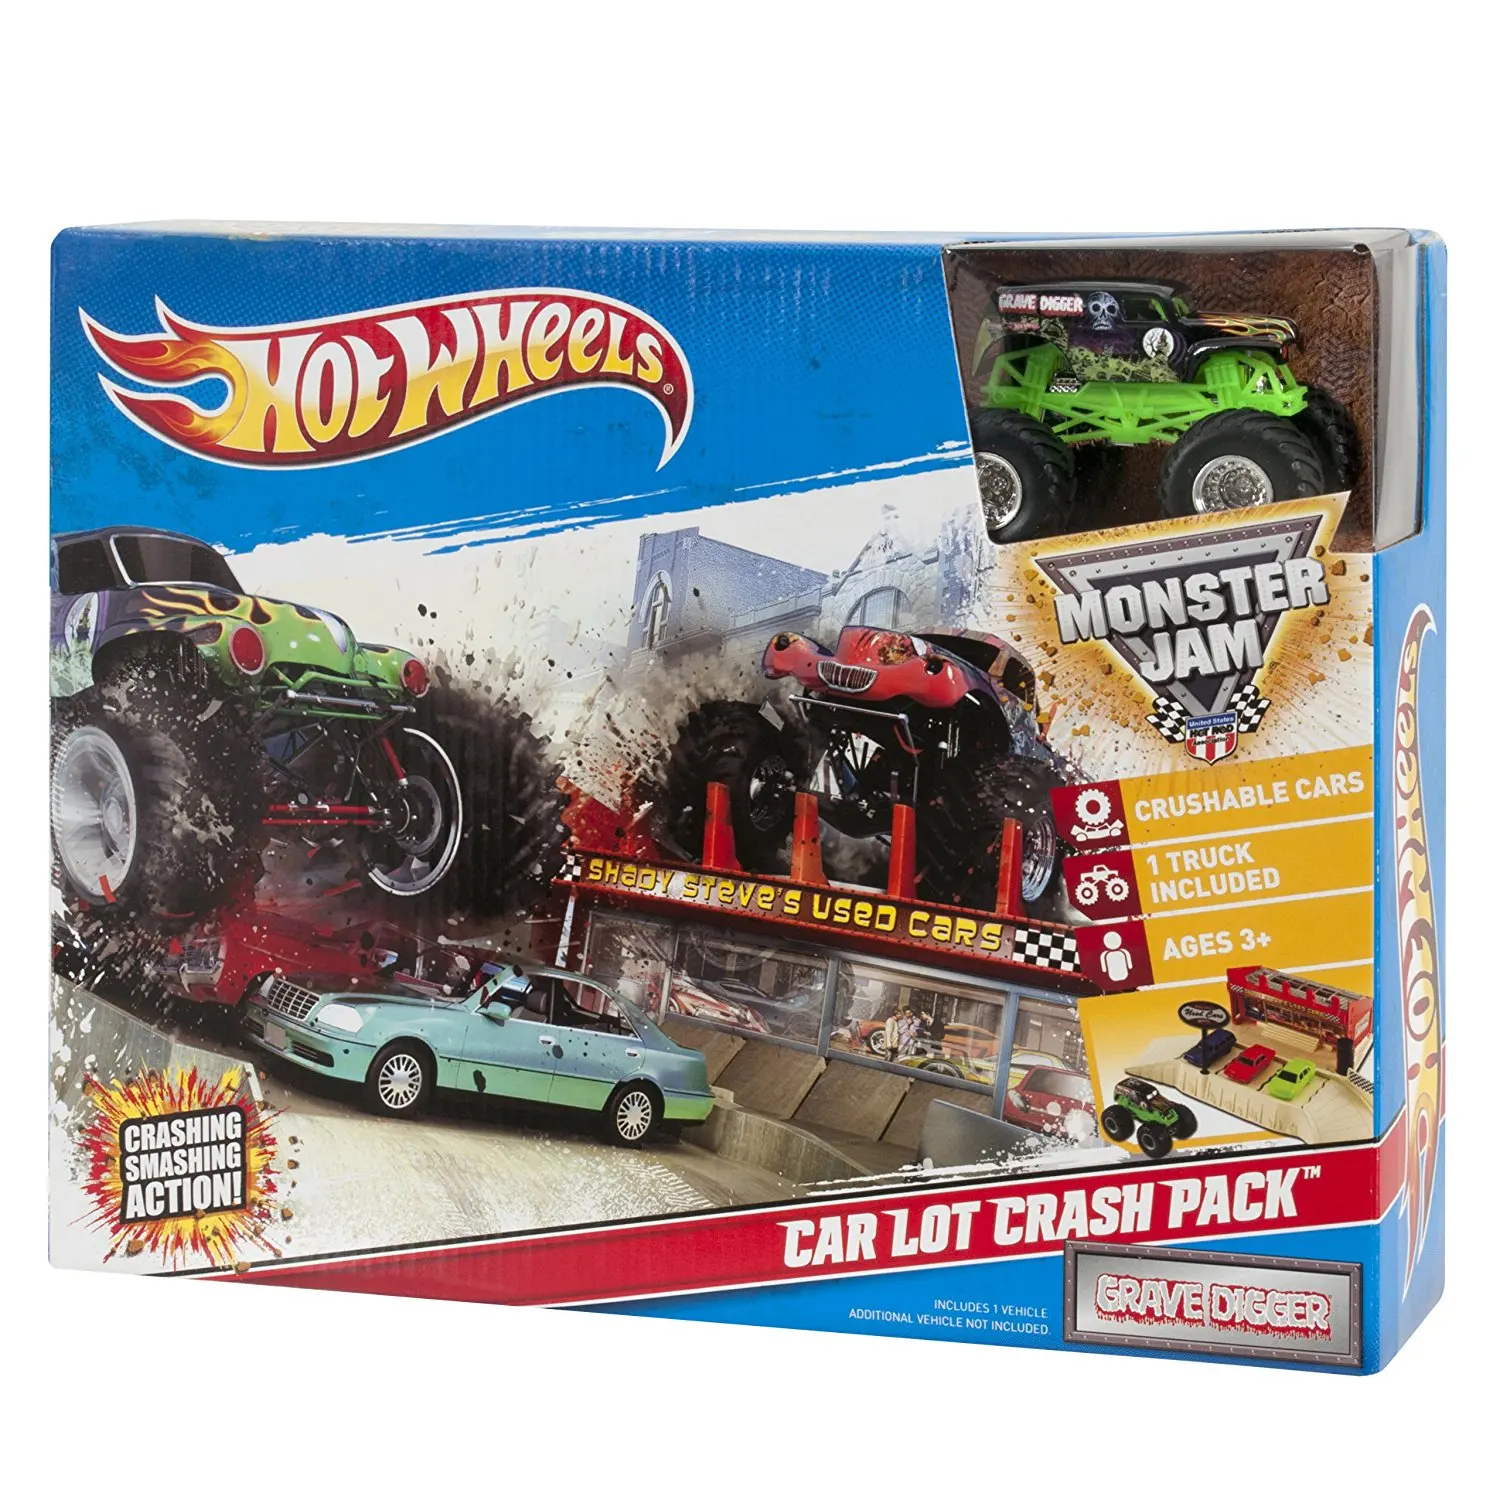 38.91. Hot Wheels Monster Jam Car Lot Crash Pack Grave Digger Playset. 